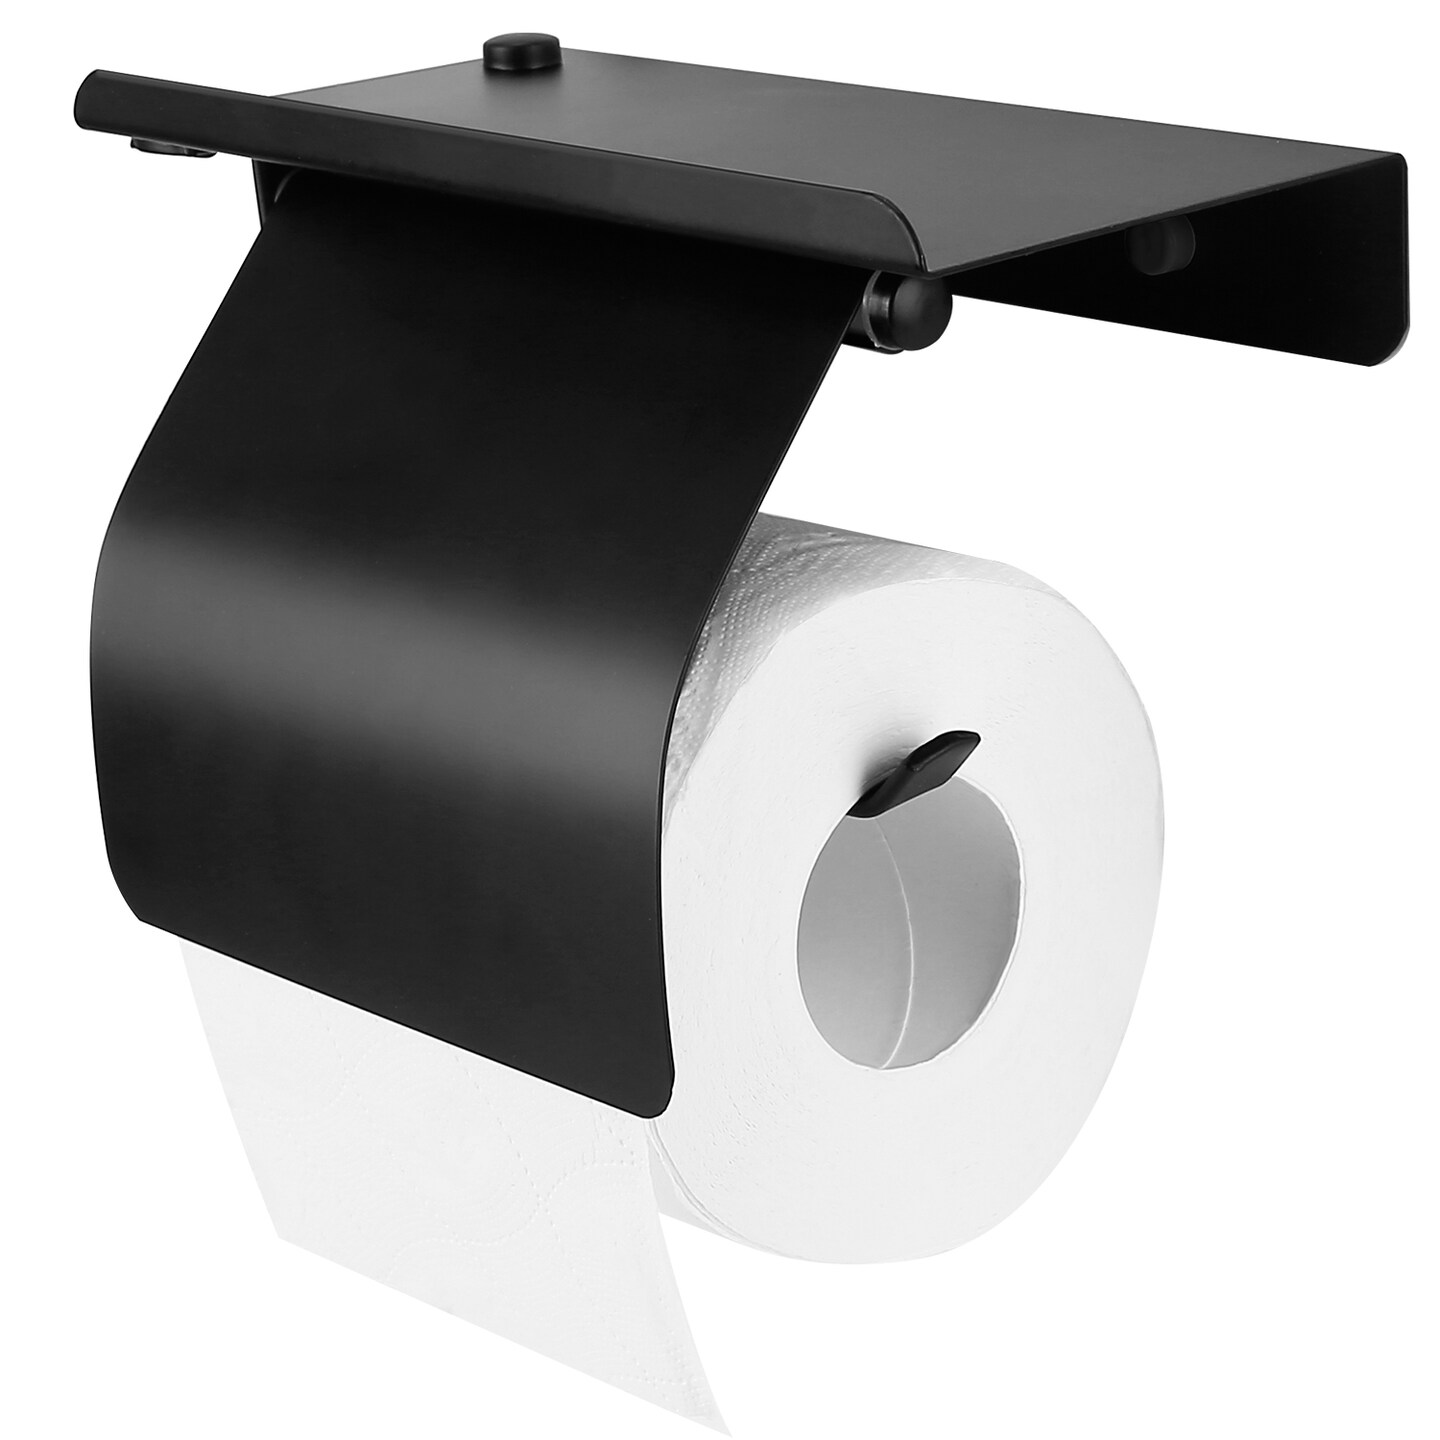 Alpine Single Toilet Paper Holders With Shelf Storage Racks 3 1516 x 5 12 x  3 1316 Chrome Pack Of 2 Holders - Office Depot